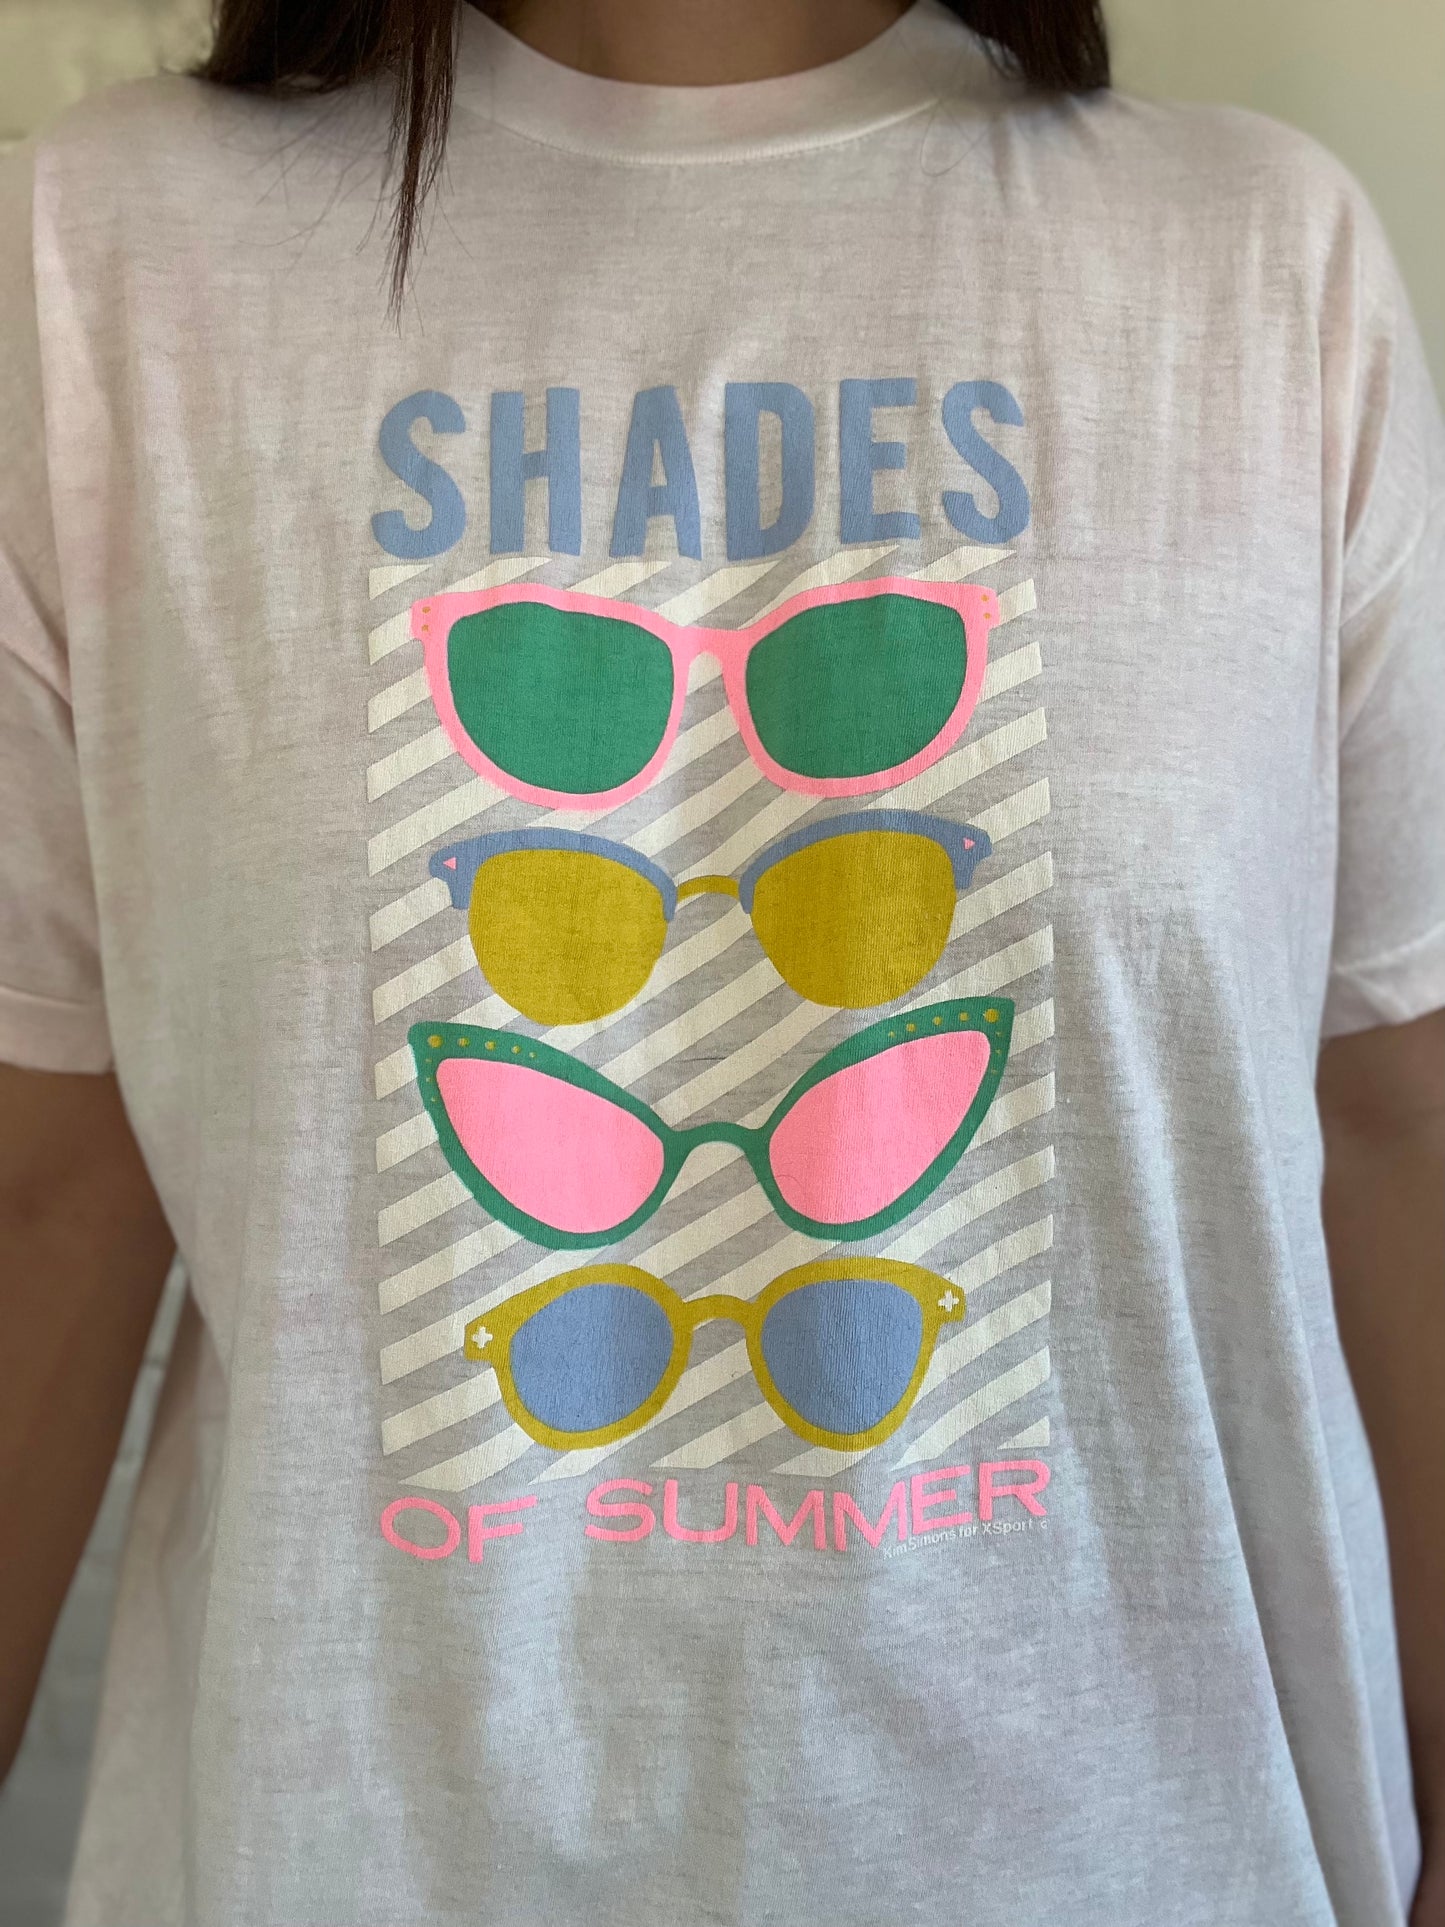 Shades of Summer Tee - Size XXL